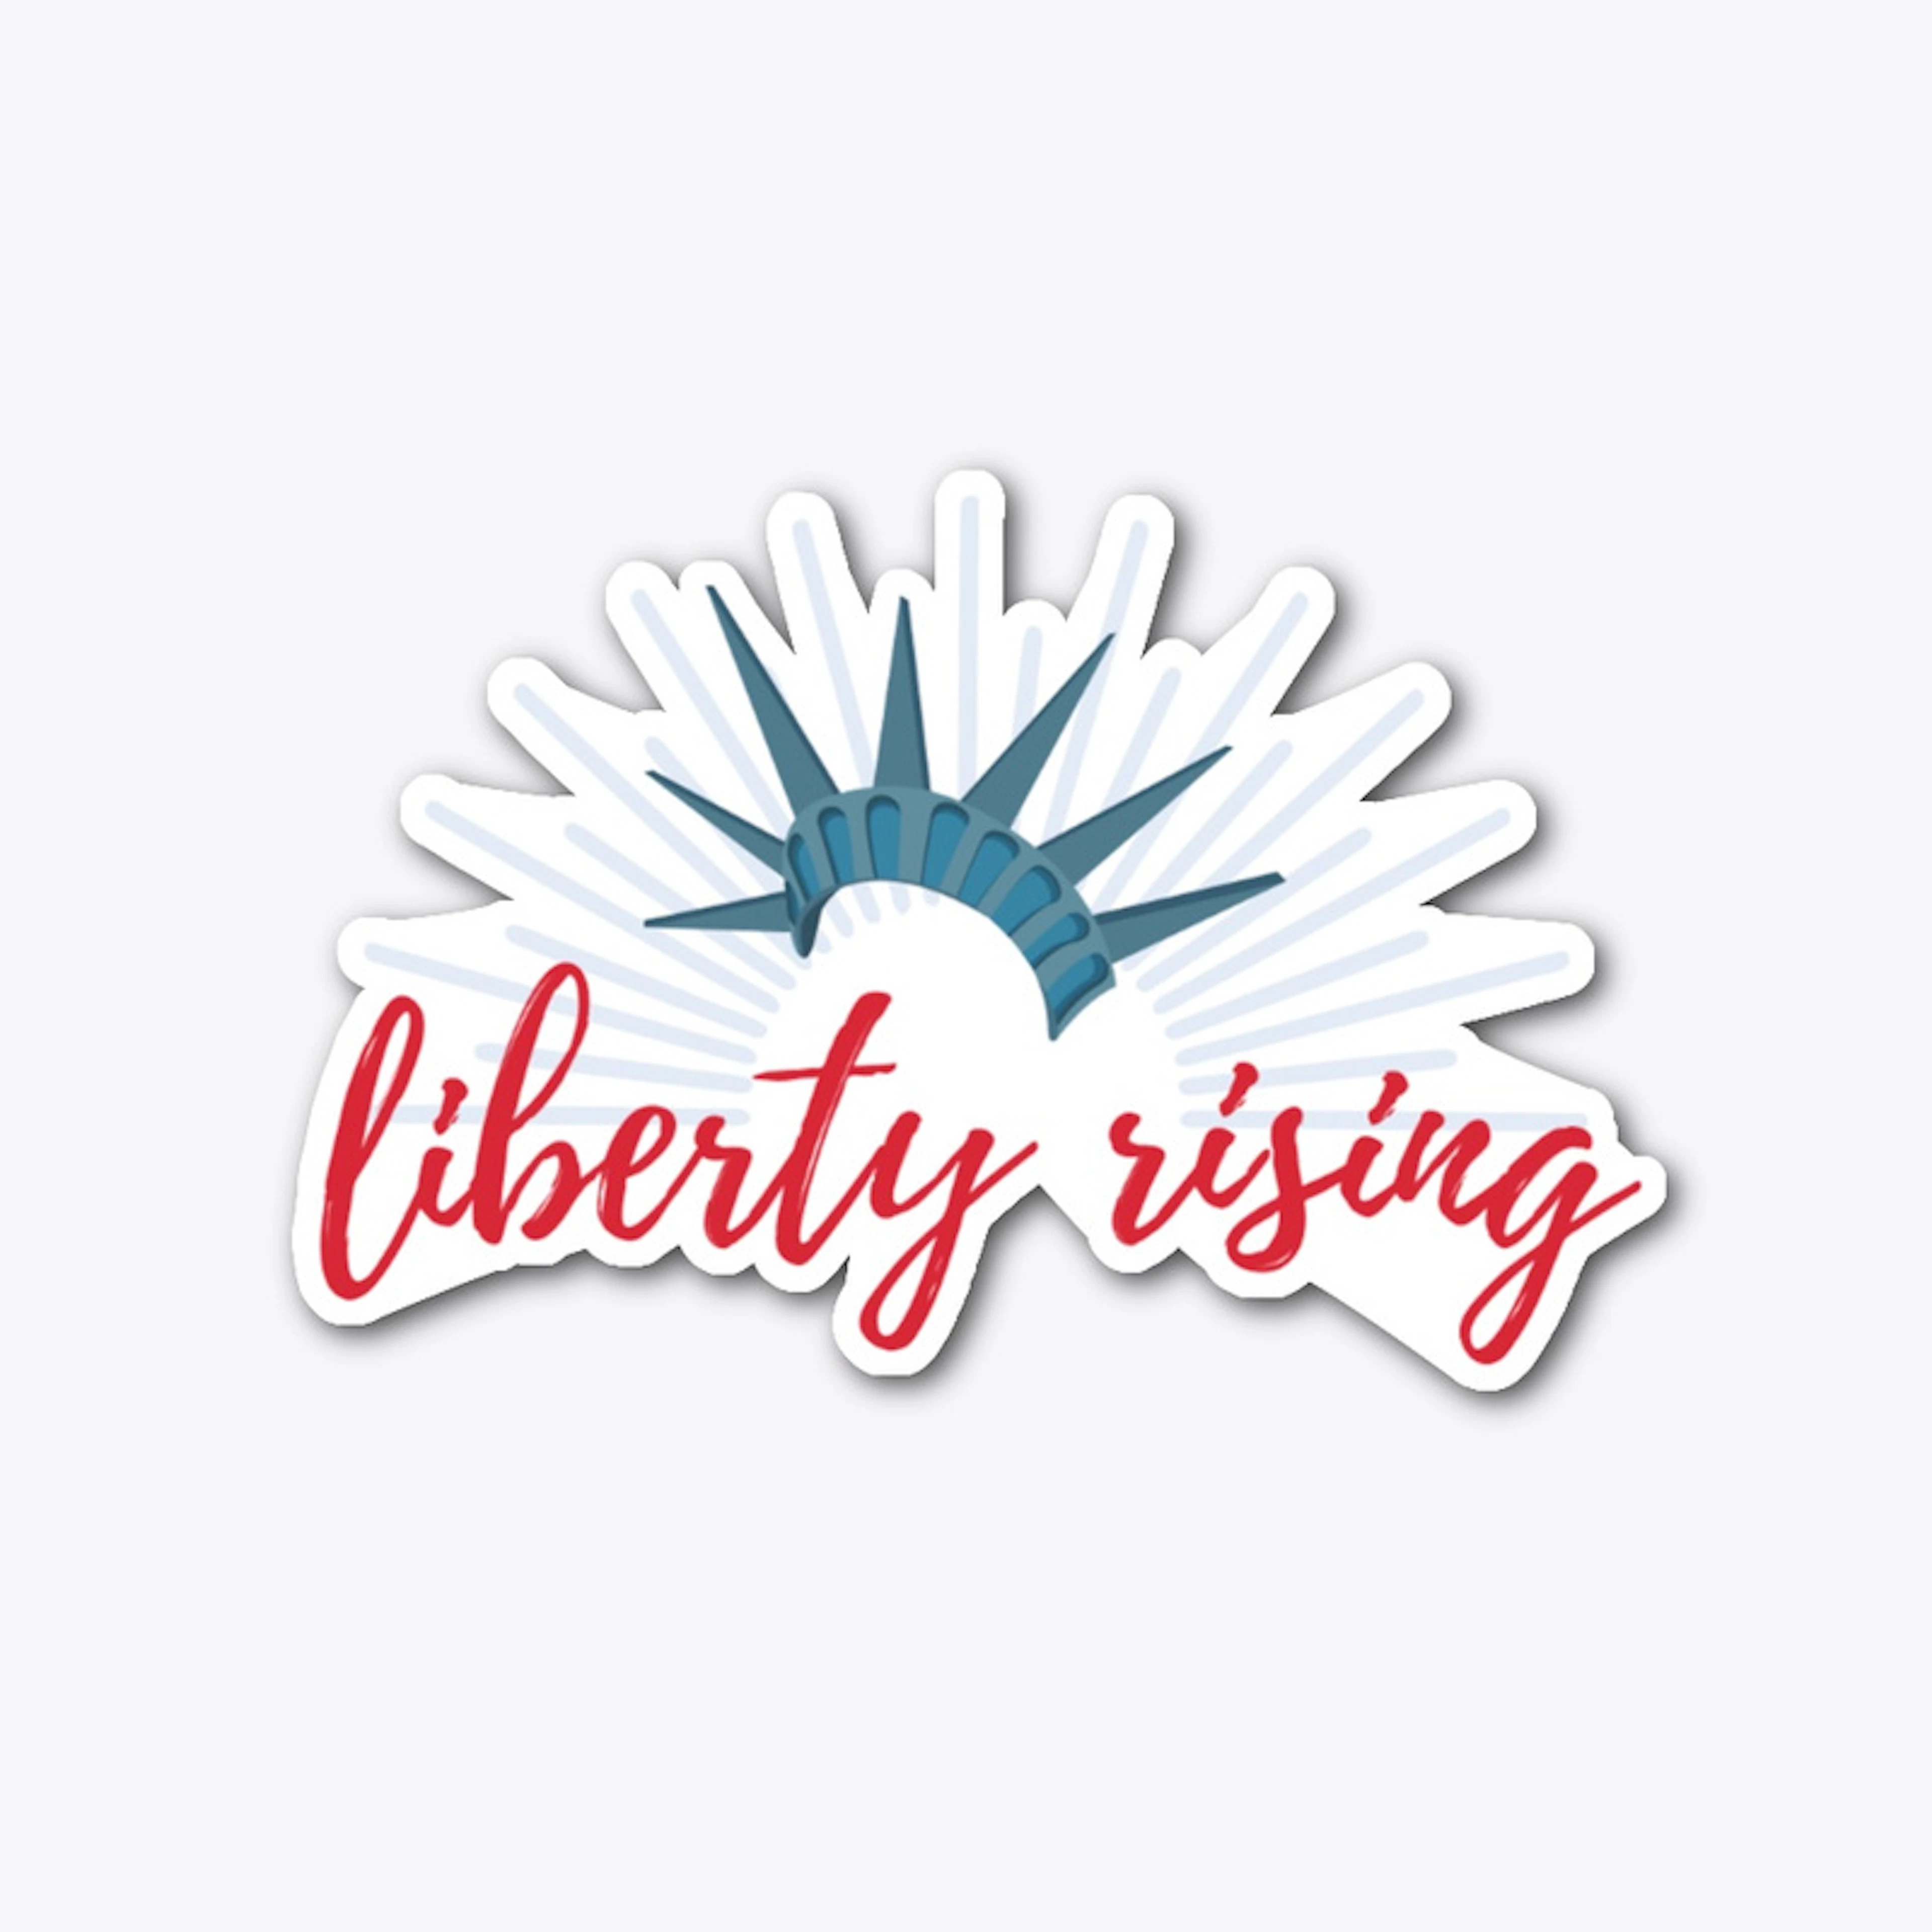 Liberty Rising on White